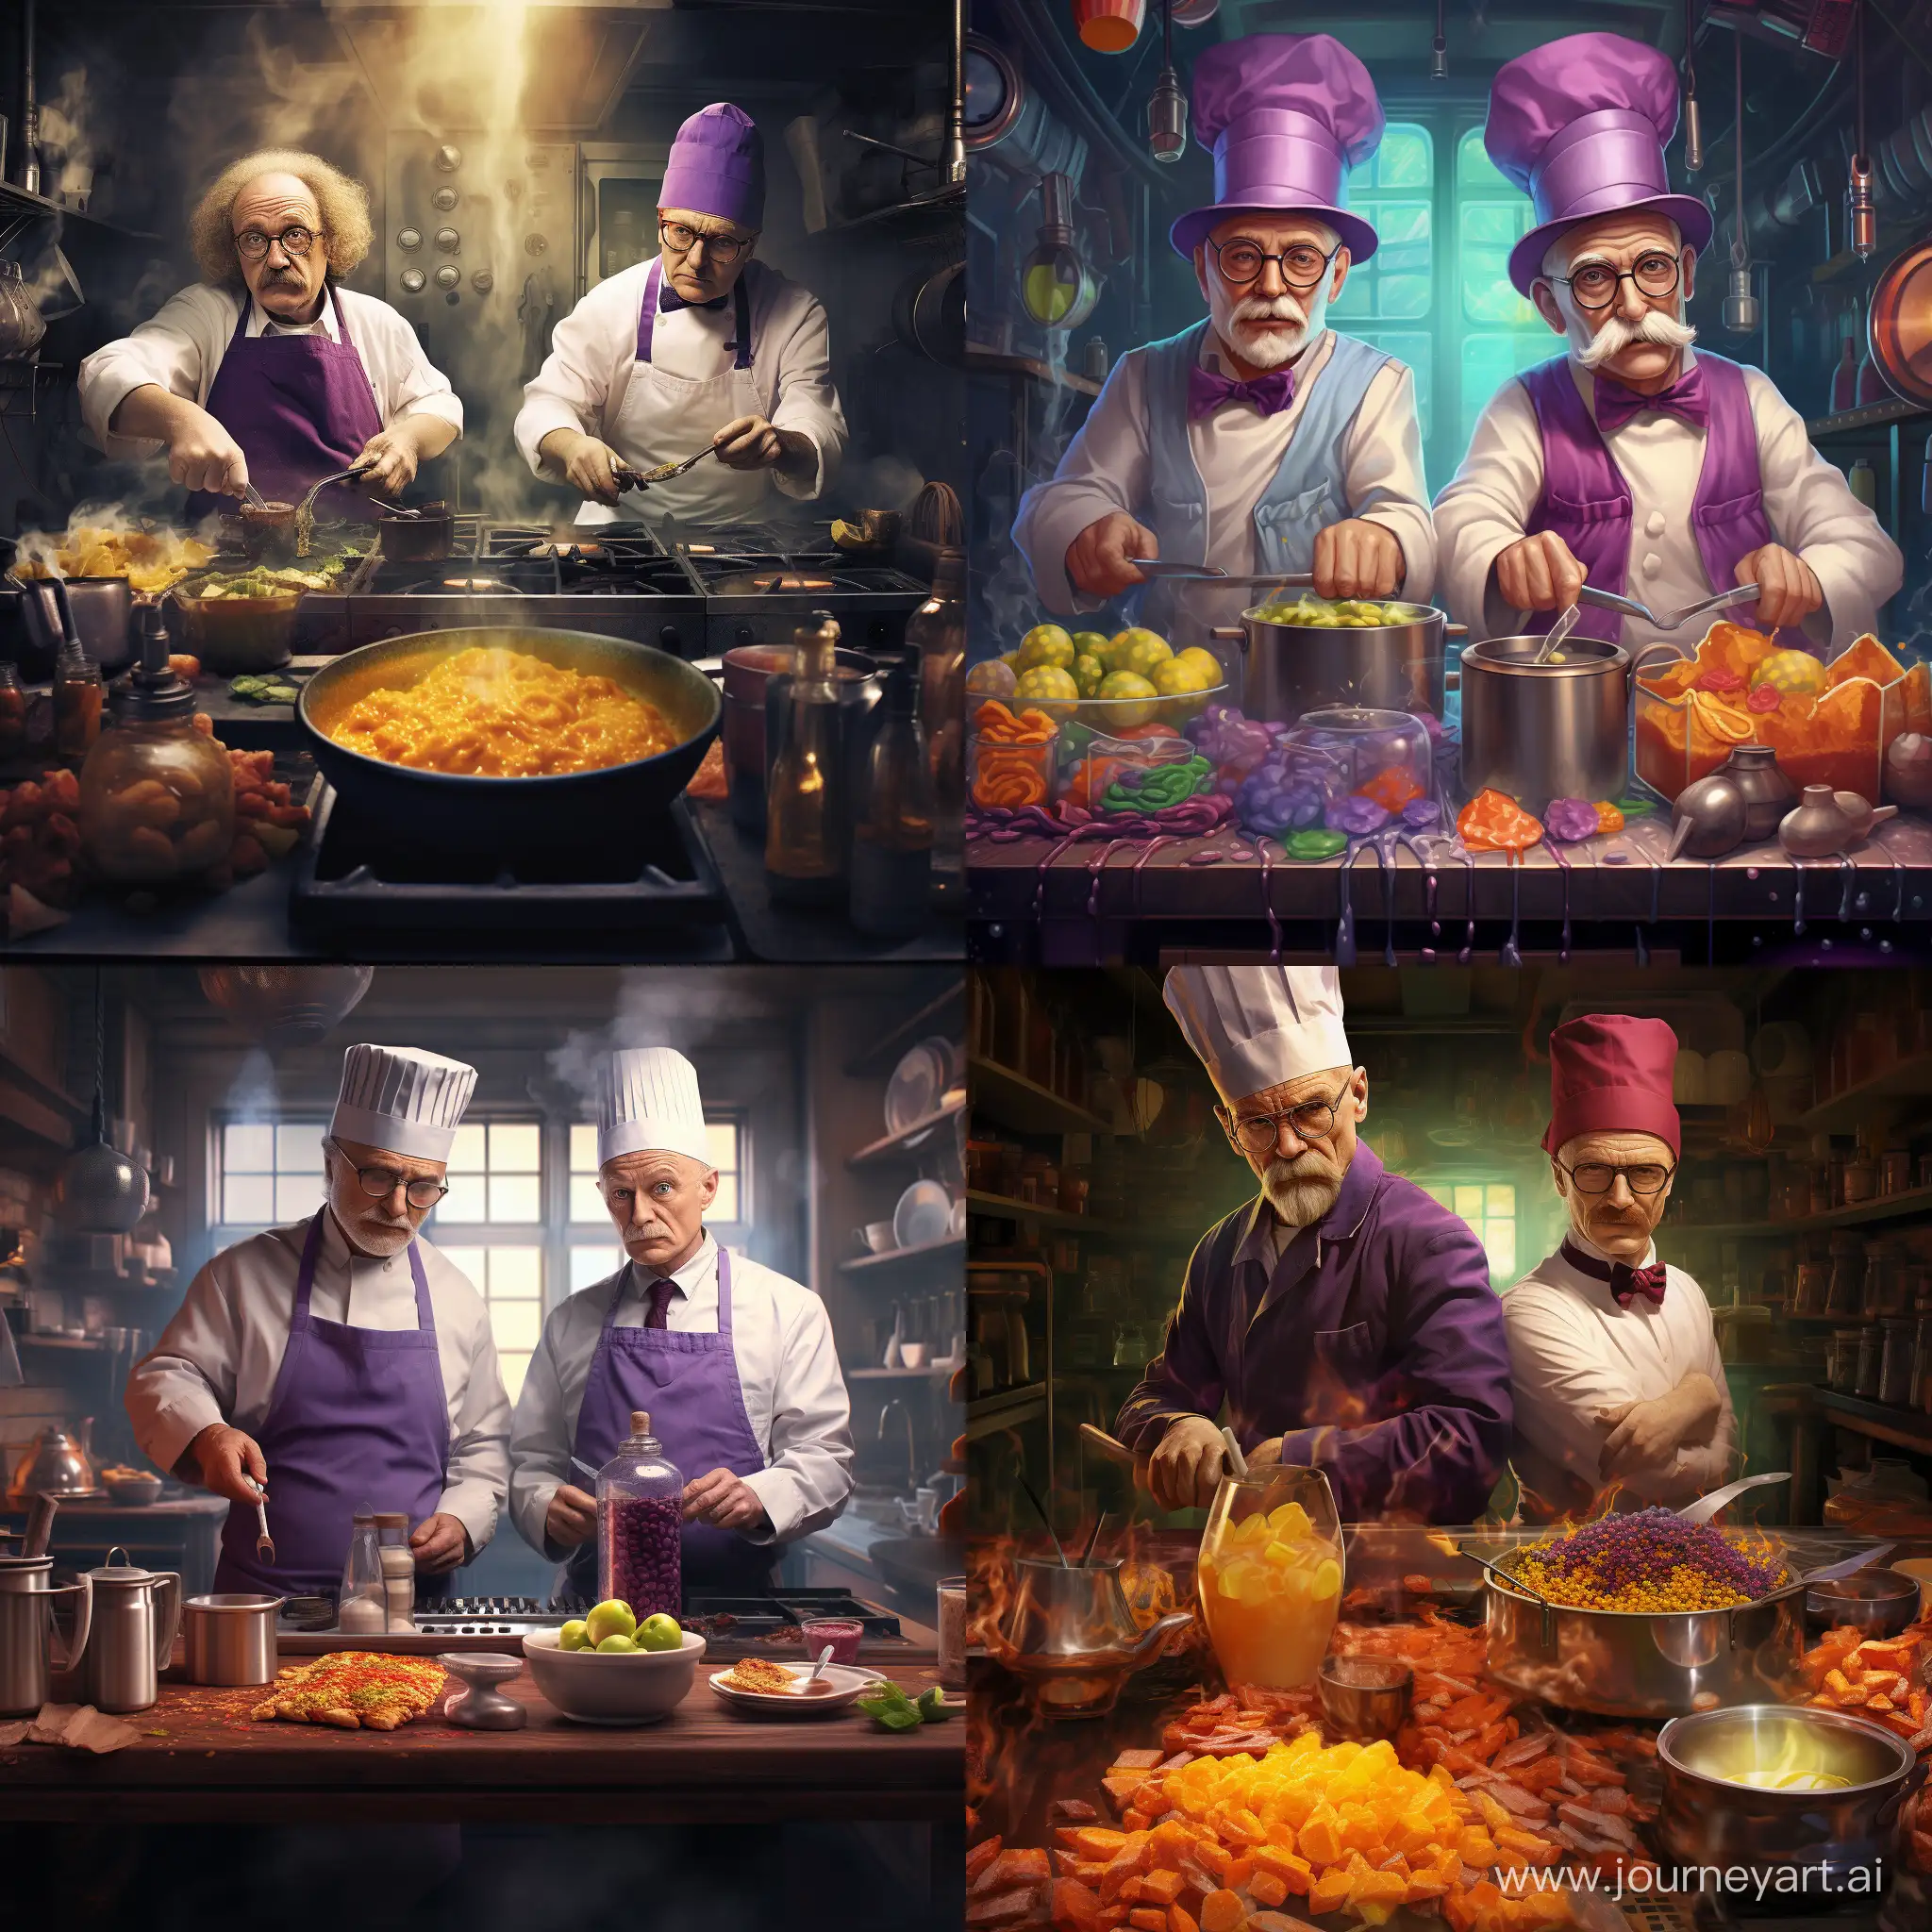 Wonka-and-Heisenberg-Cooking-in-a-Whimsical-11-Aspect-Ratio-Scene